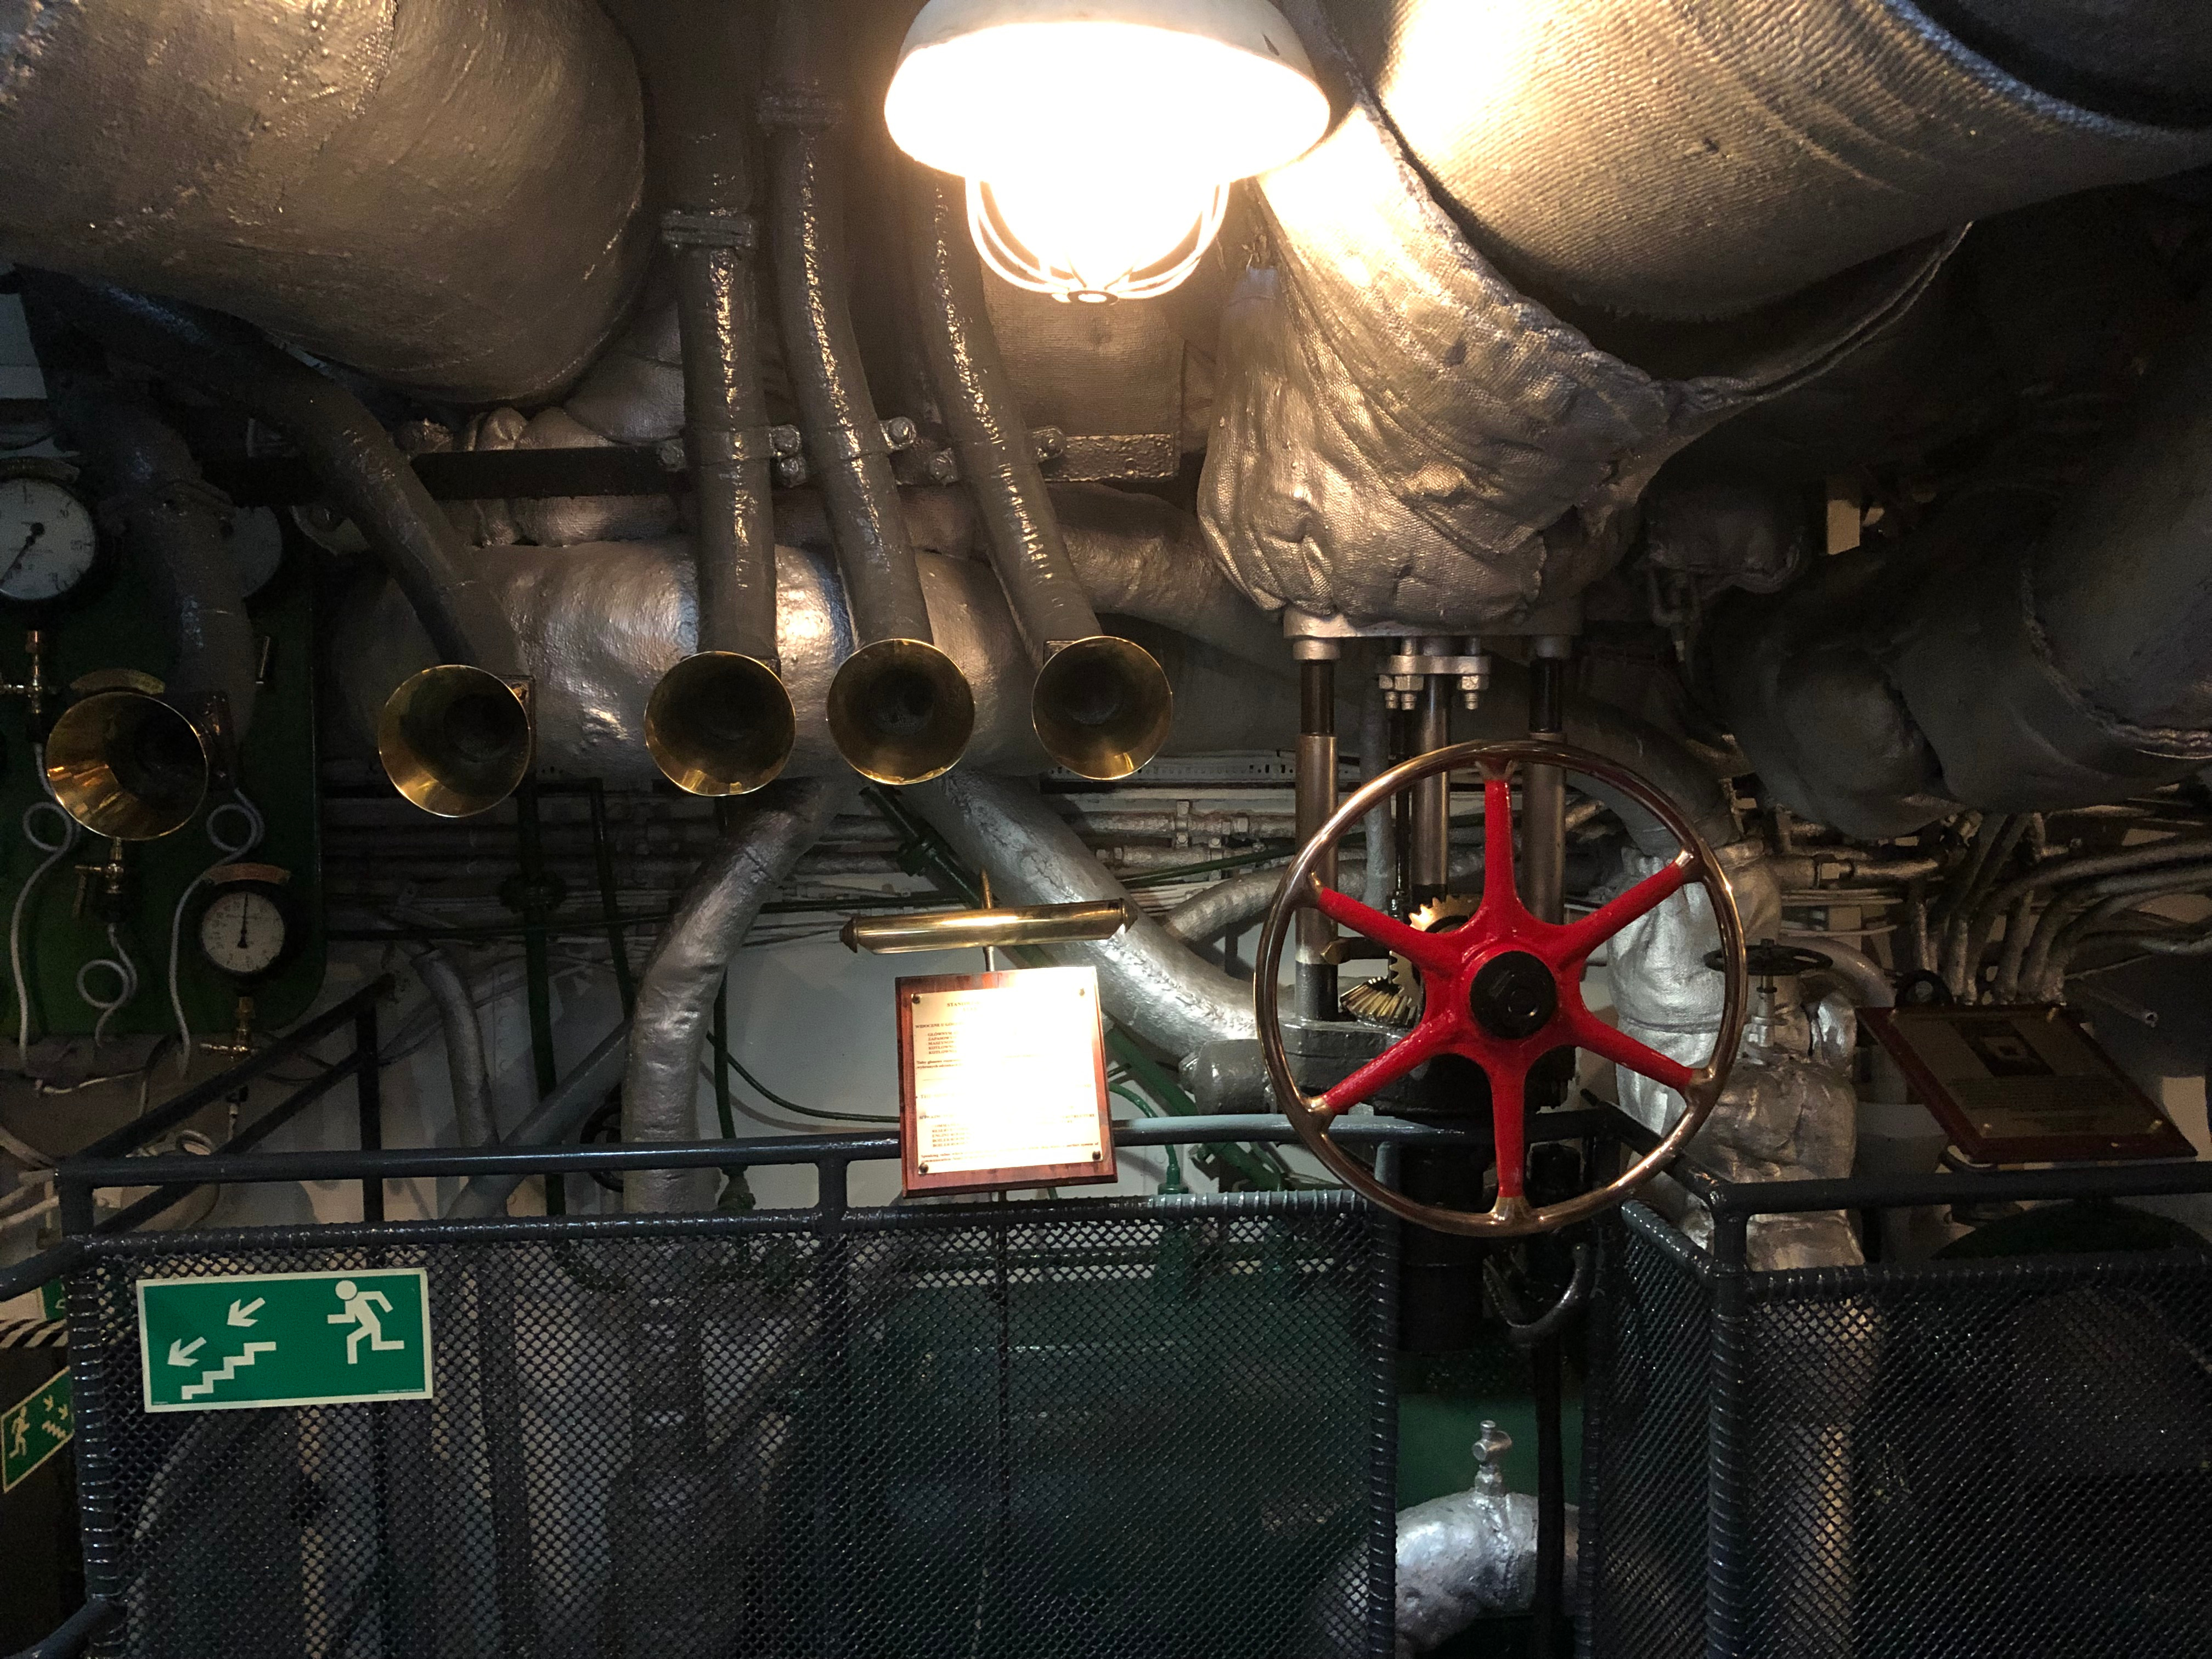 Main electromechanical control station below decks, ORP Blyskawica, Gdynia, Poland, 15 Jun 2019